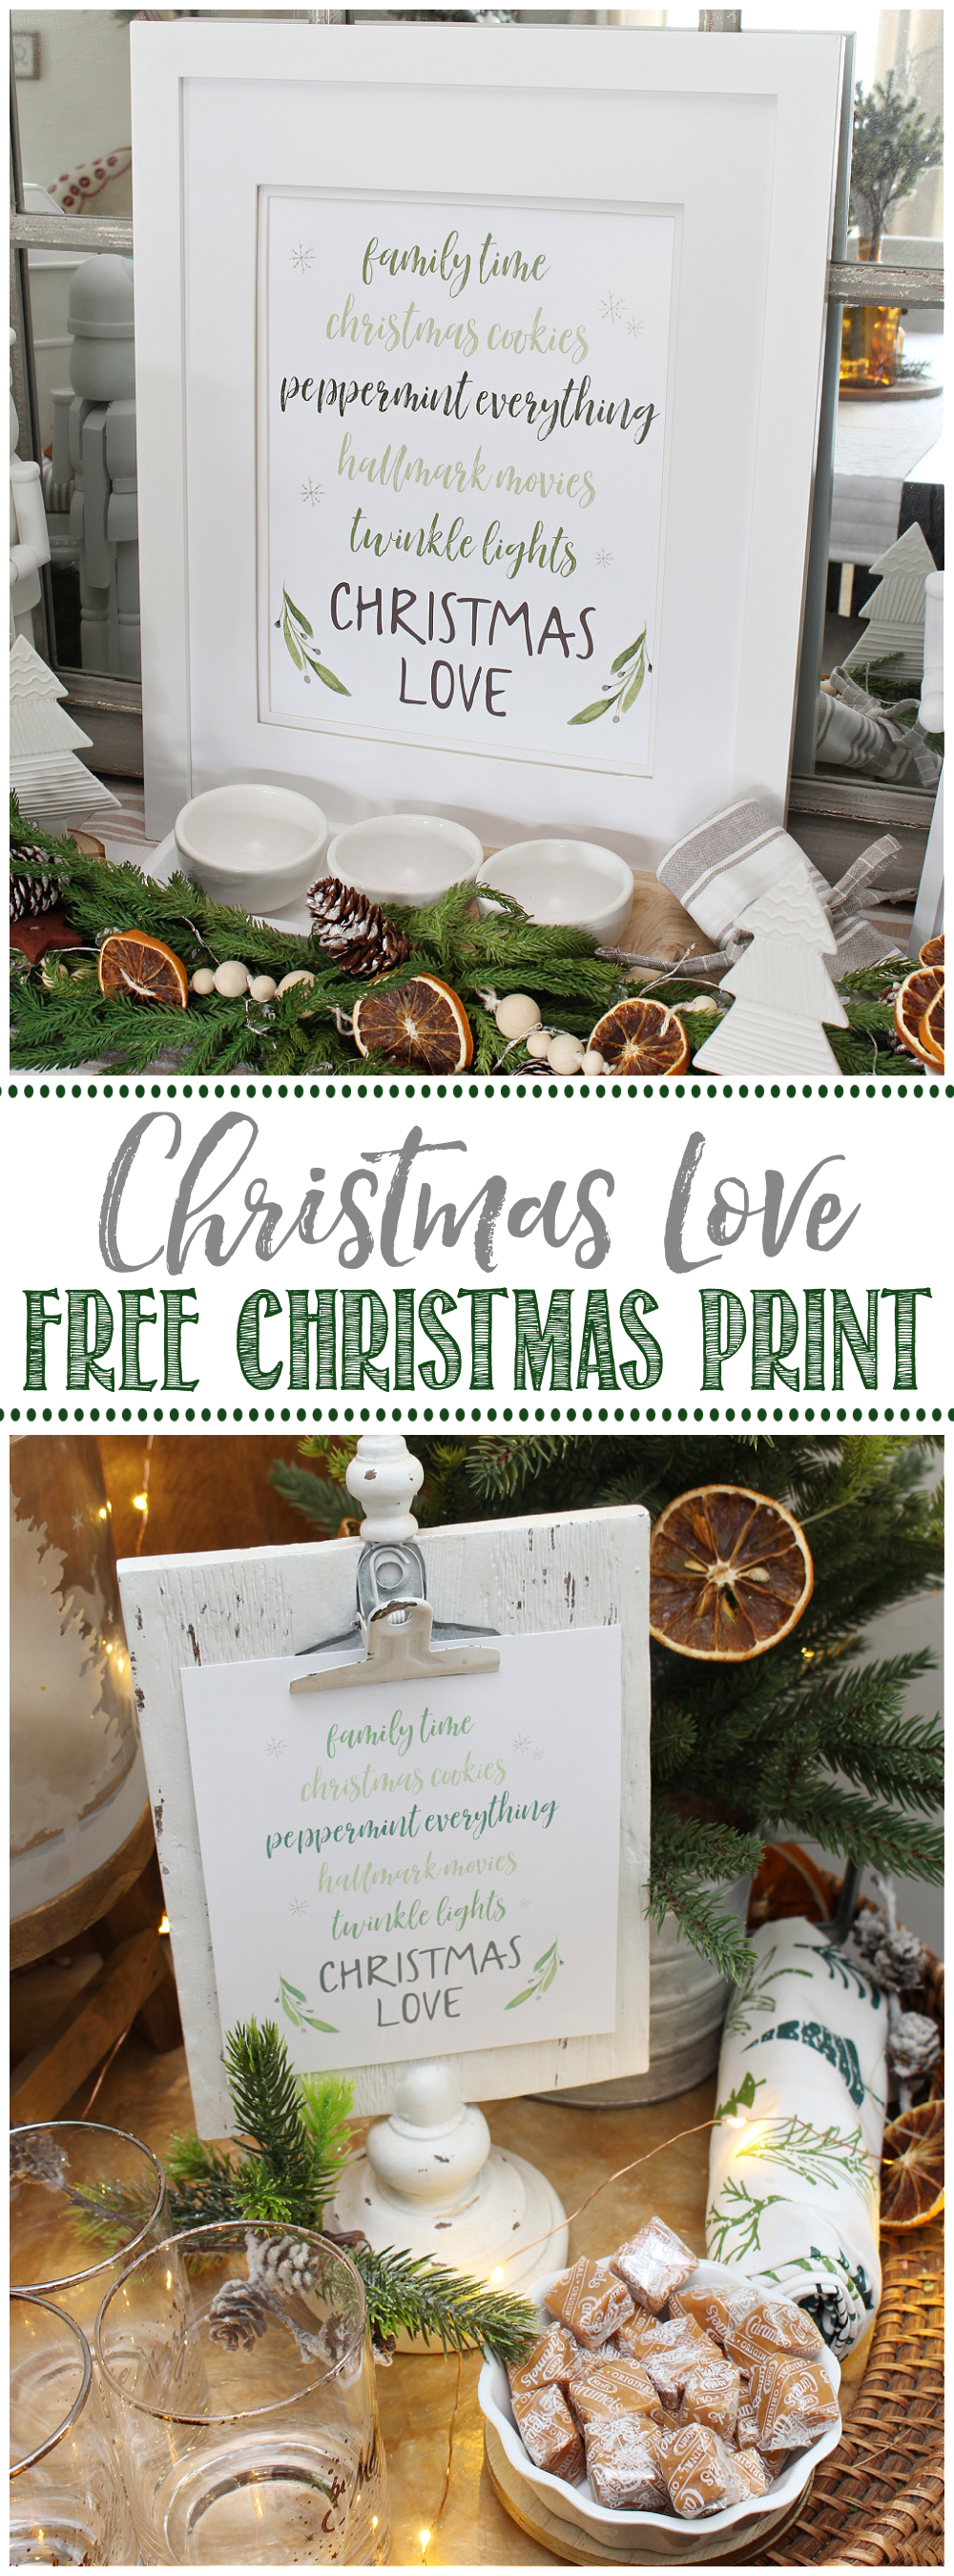 Christmas Love free Christmas printable on a side board with greenery.